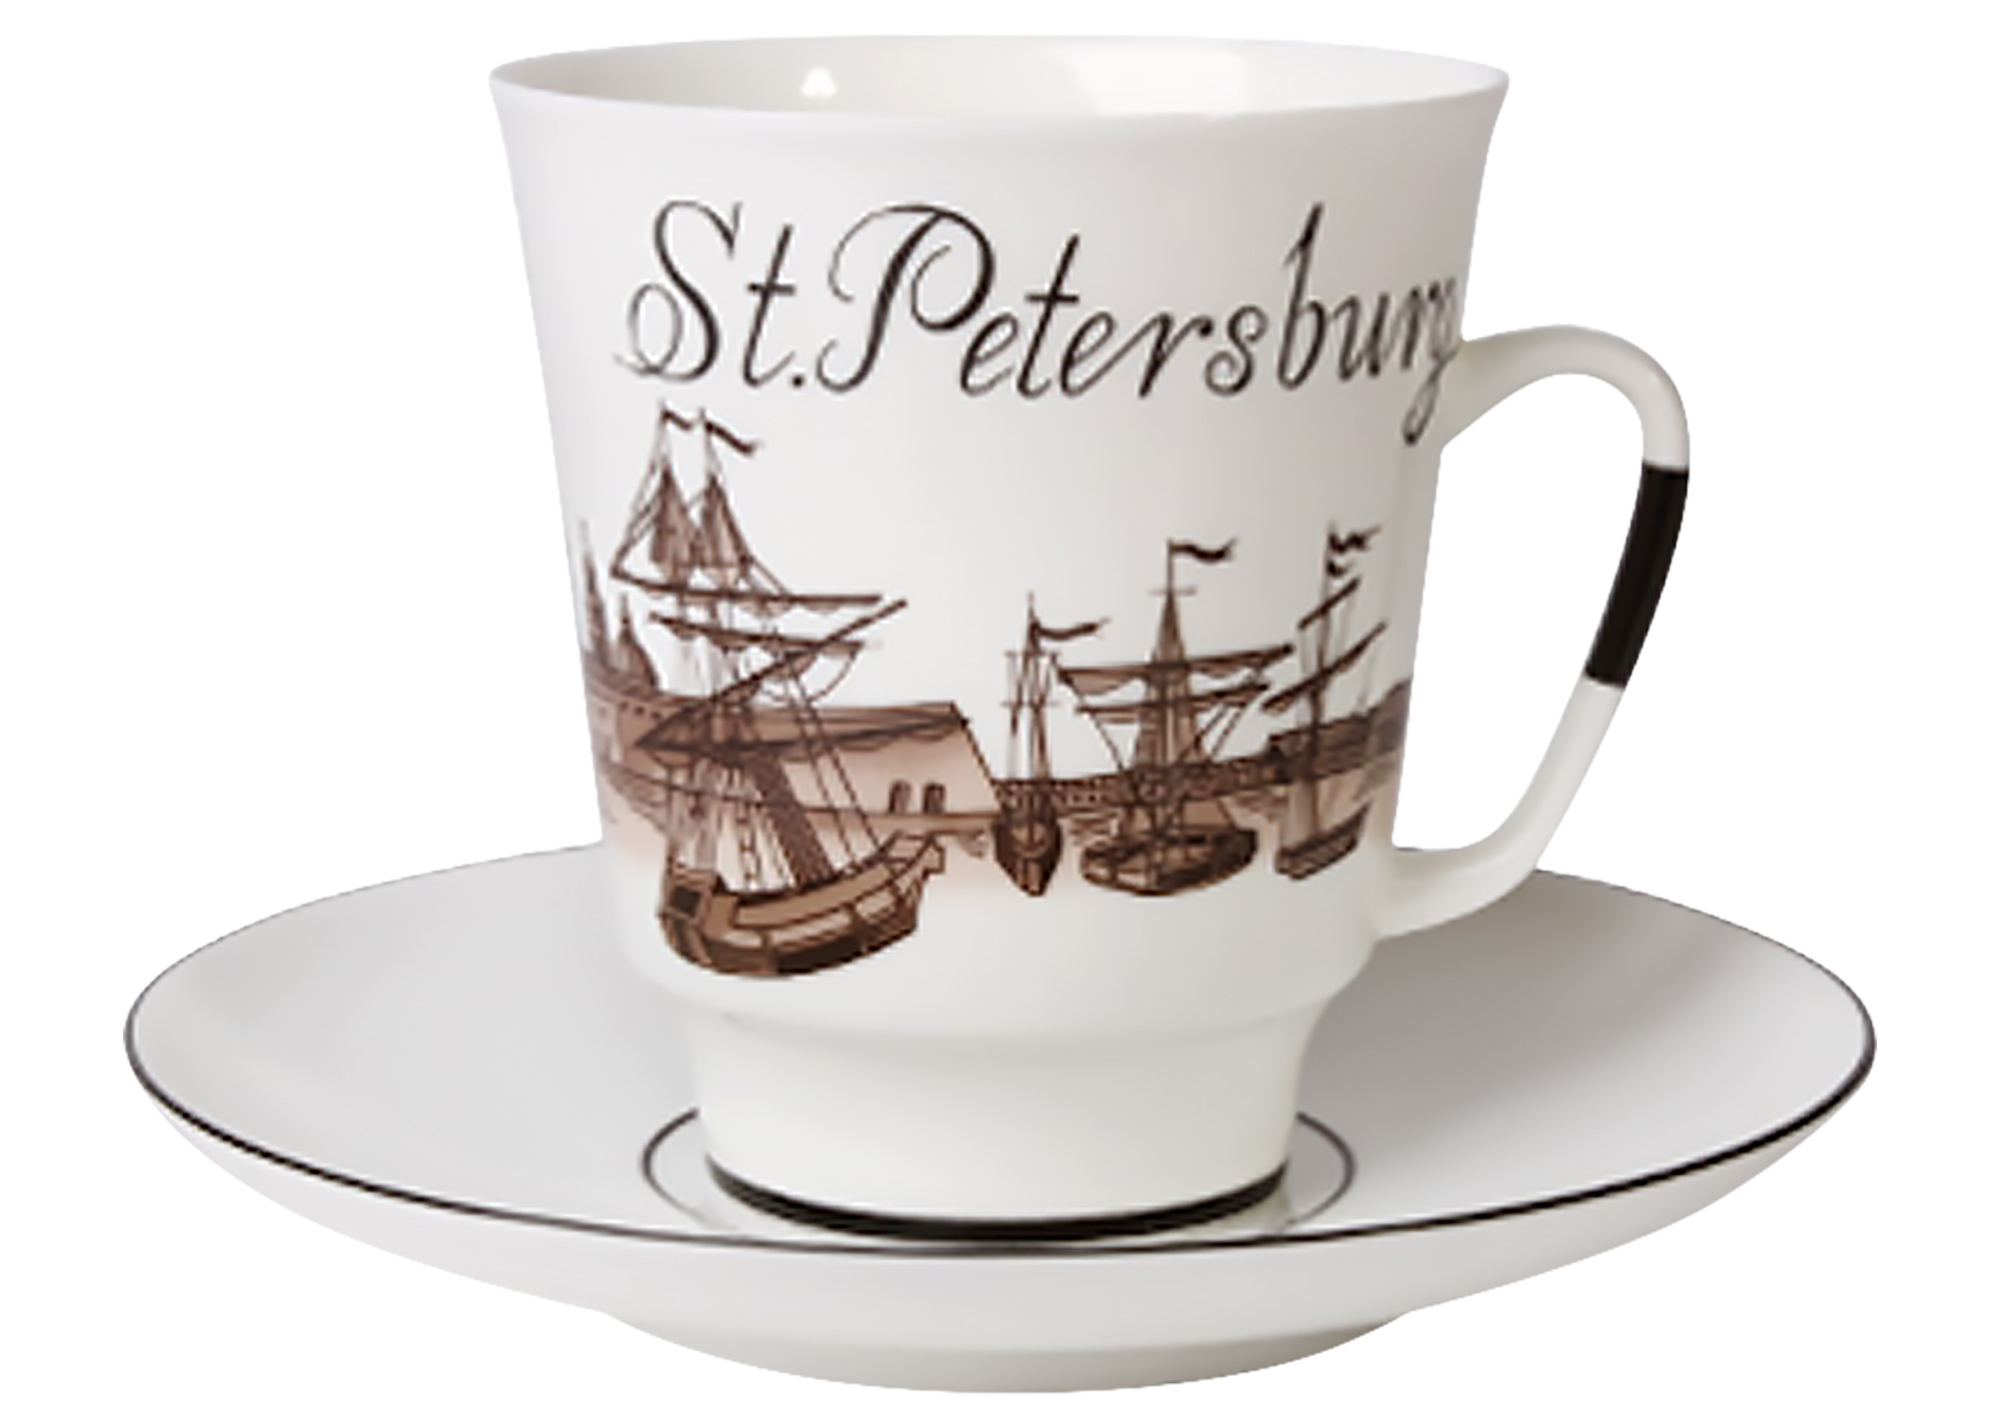 Buy Do Svidaniya St. Petersburg! (Harbor) Bone China Cup and Saucer at GoldenCockerel.com